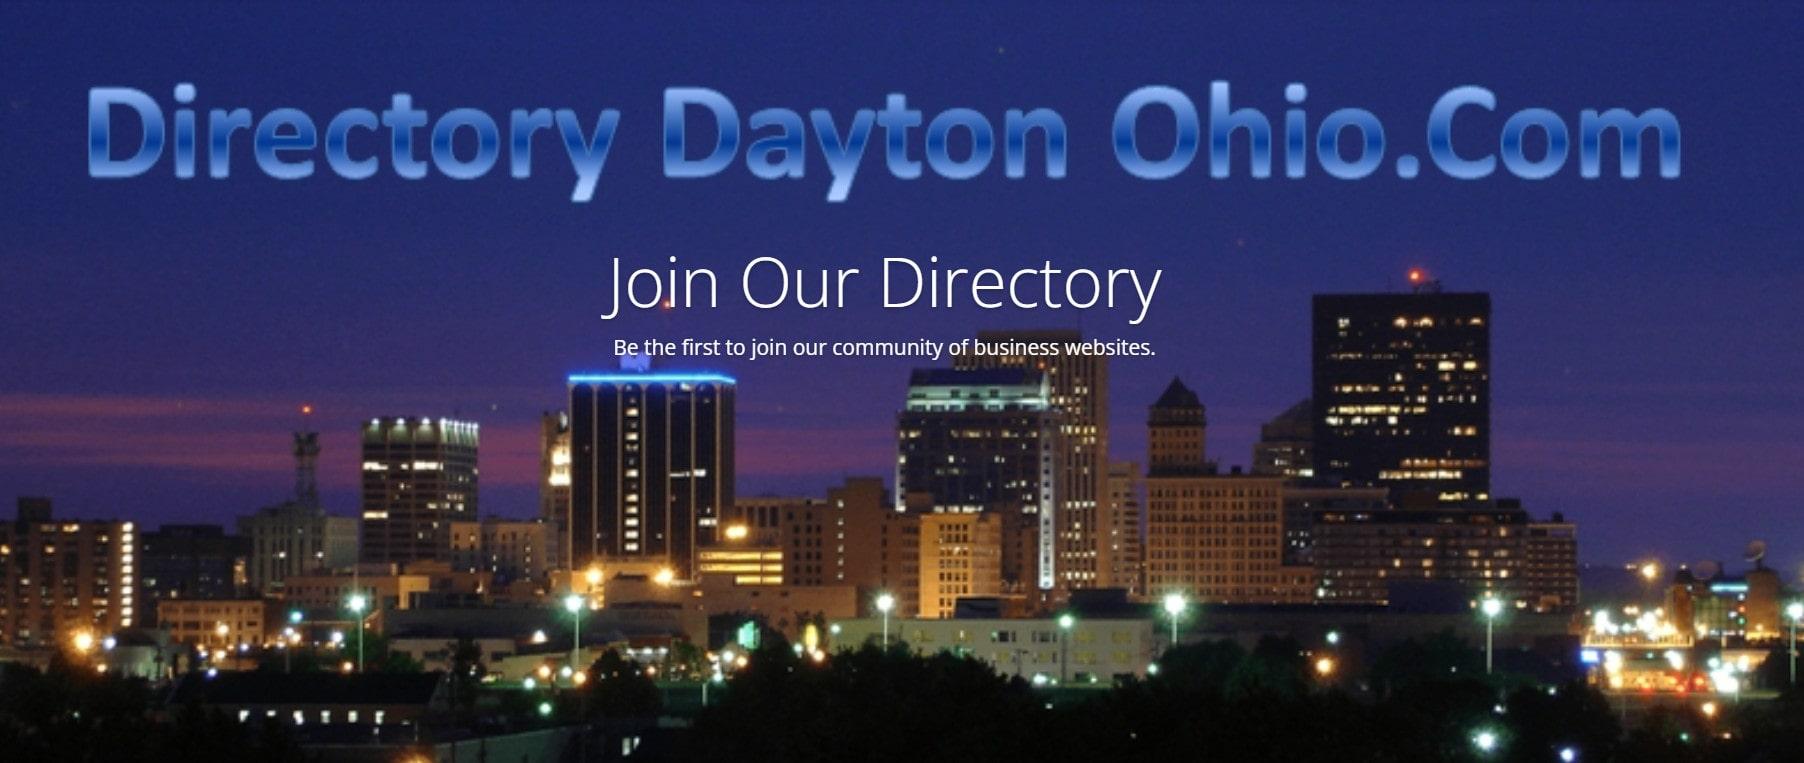 Directory Dayton Ohio